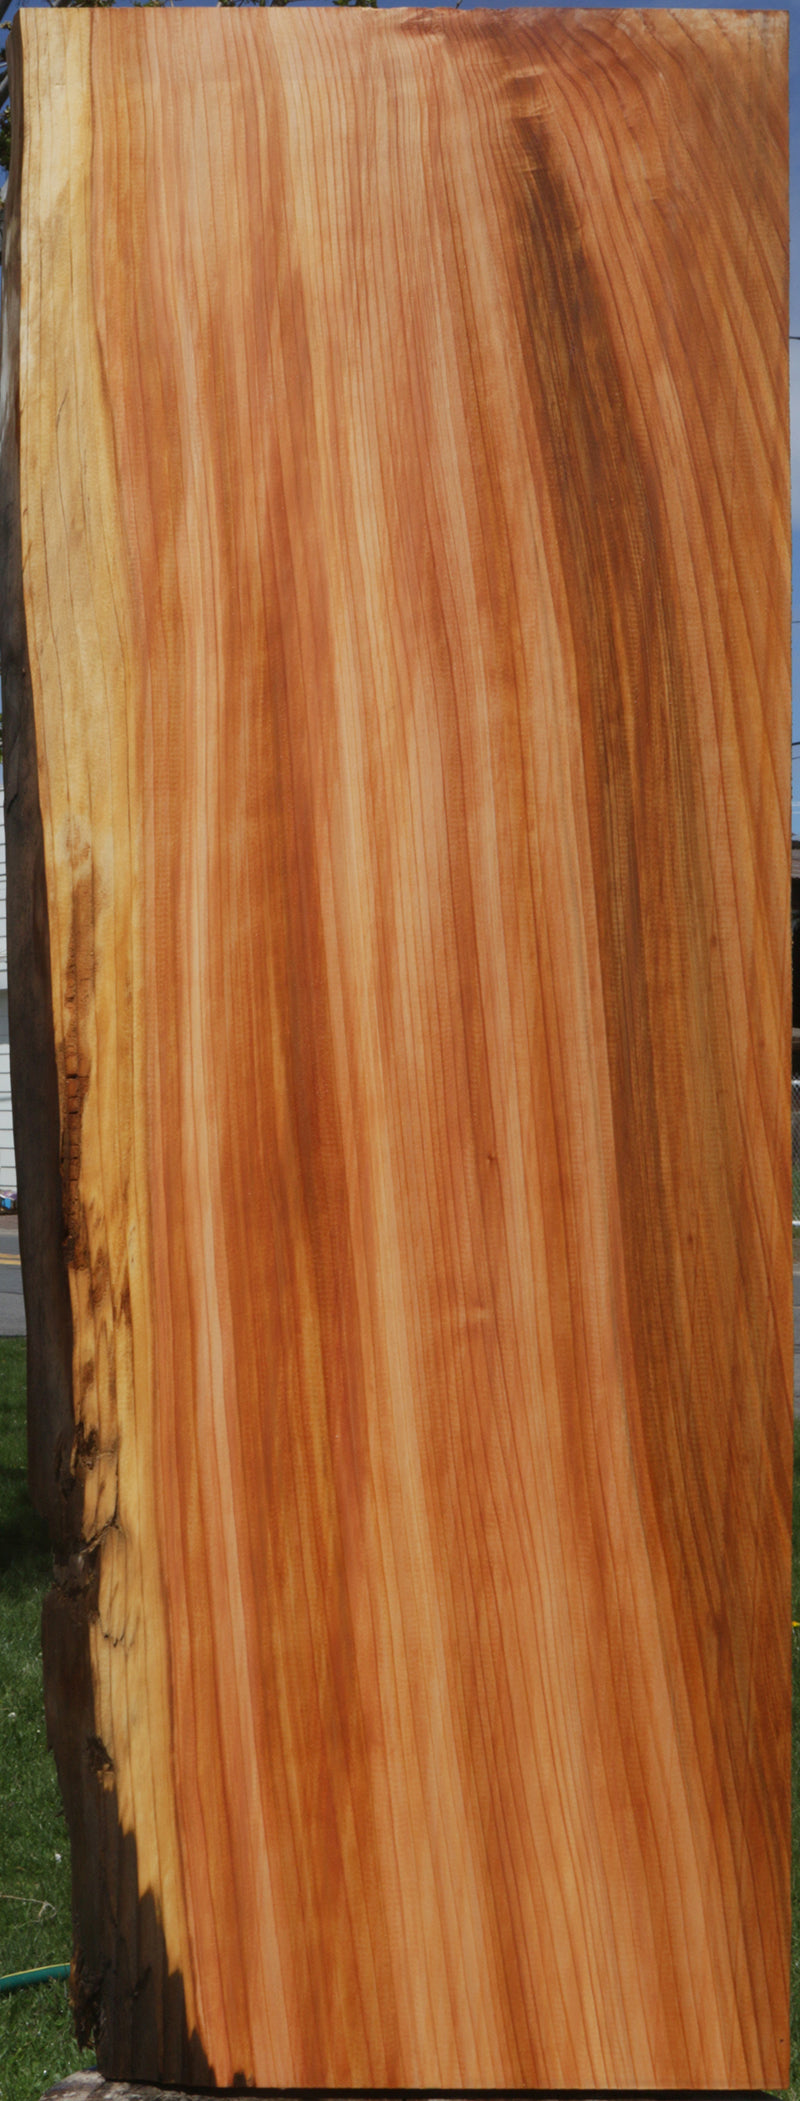 Western Red Cedar Live Edge Lumber